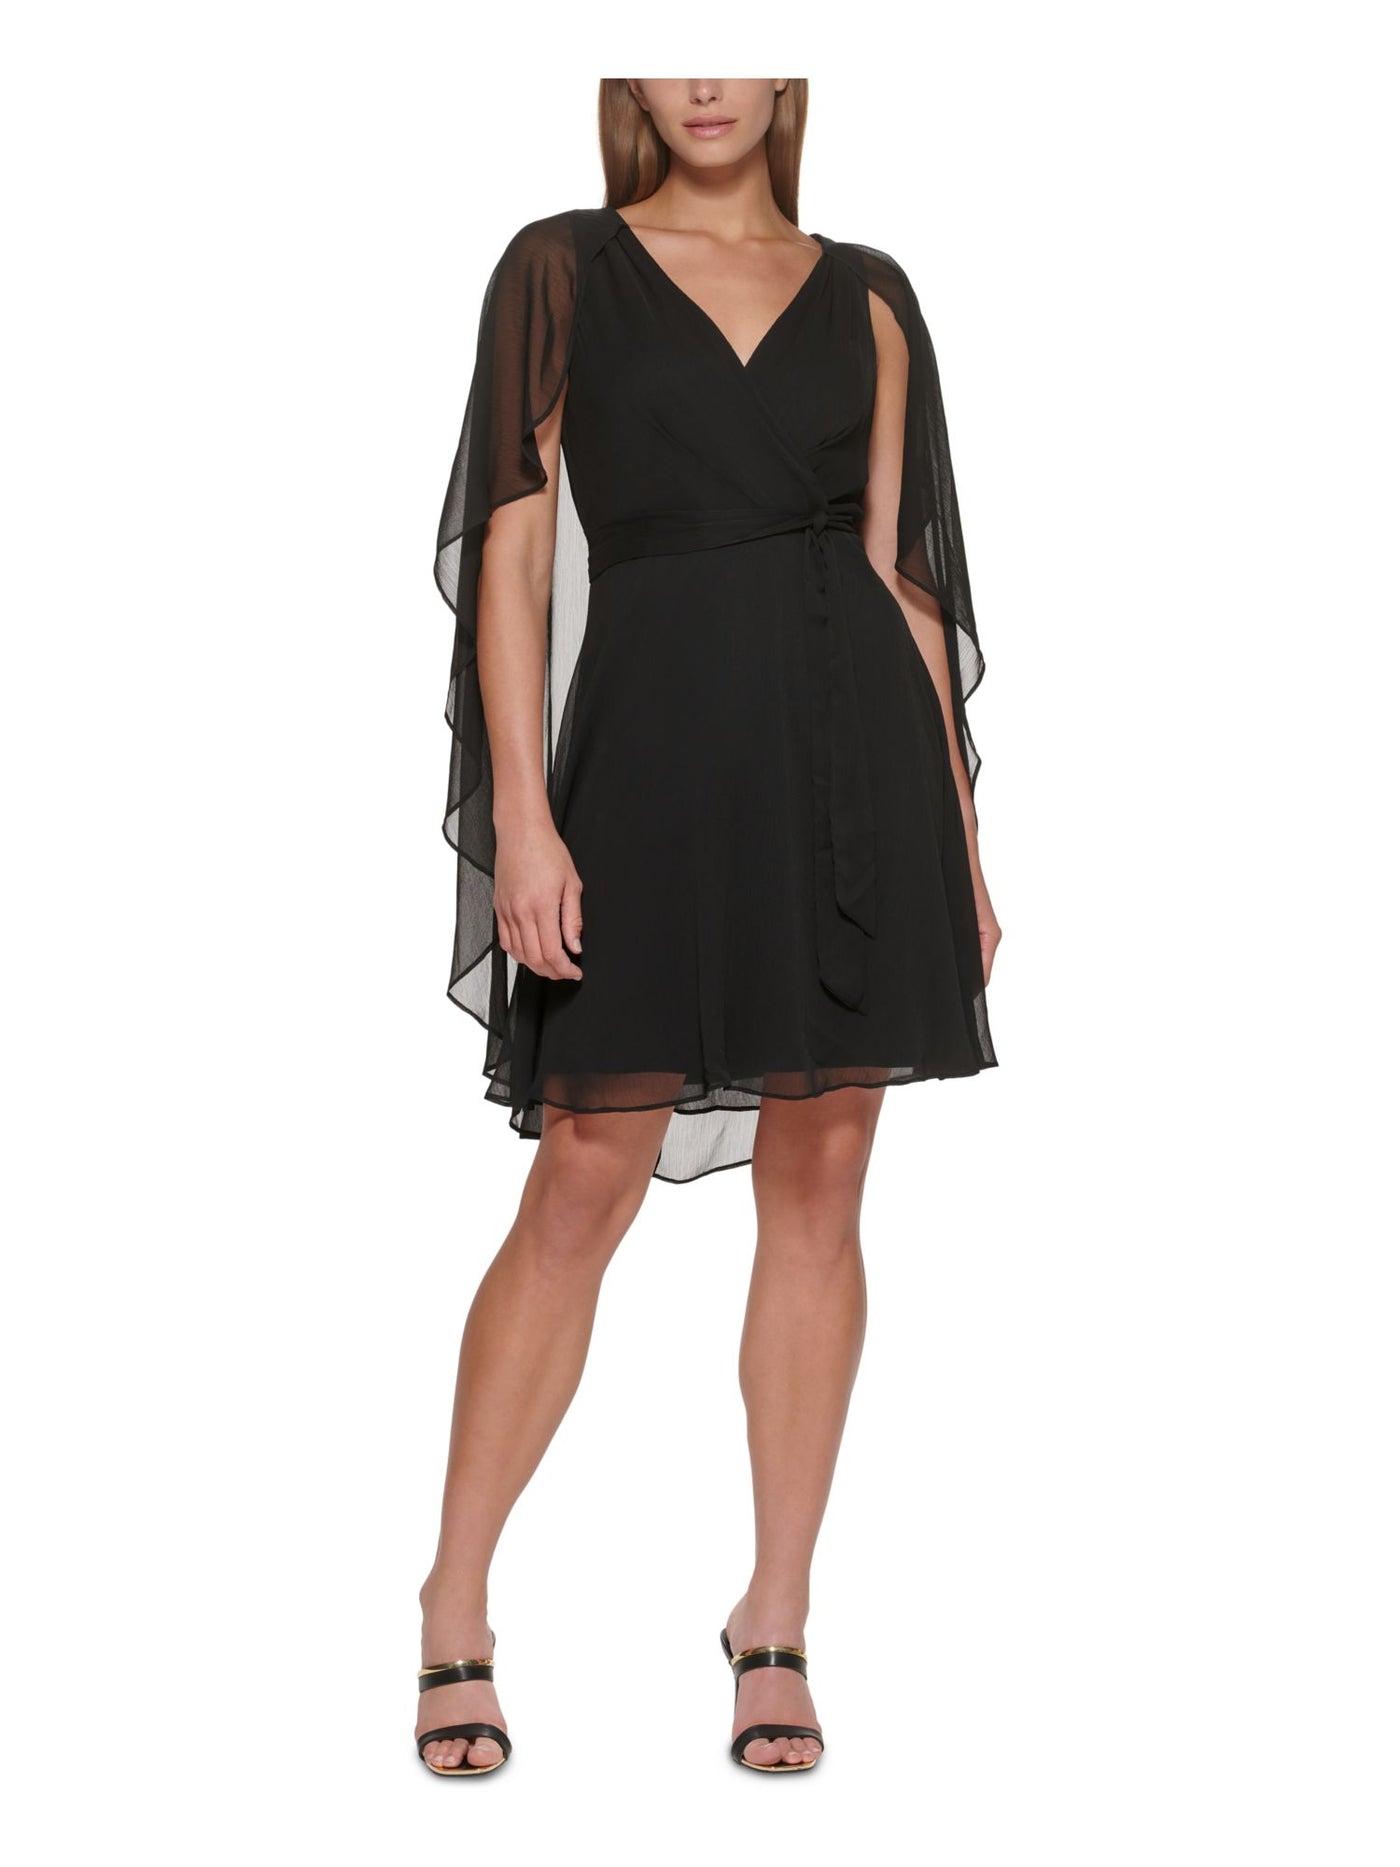 DKNY Womens Black Sleeveless V Neck Above The Knee Formal Fit + Flare Dress 6